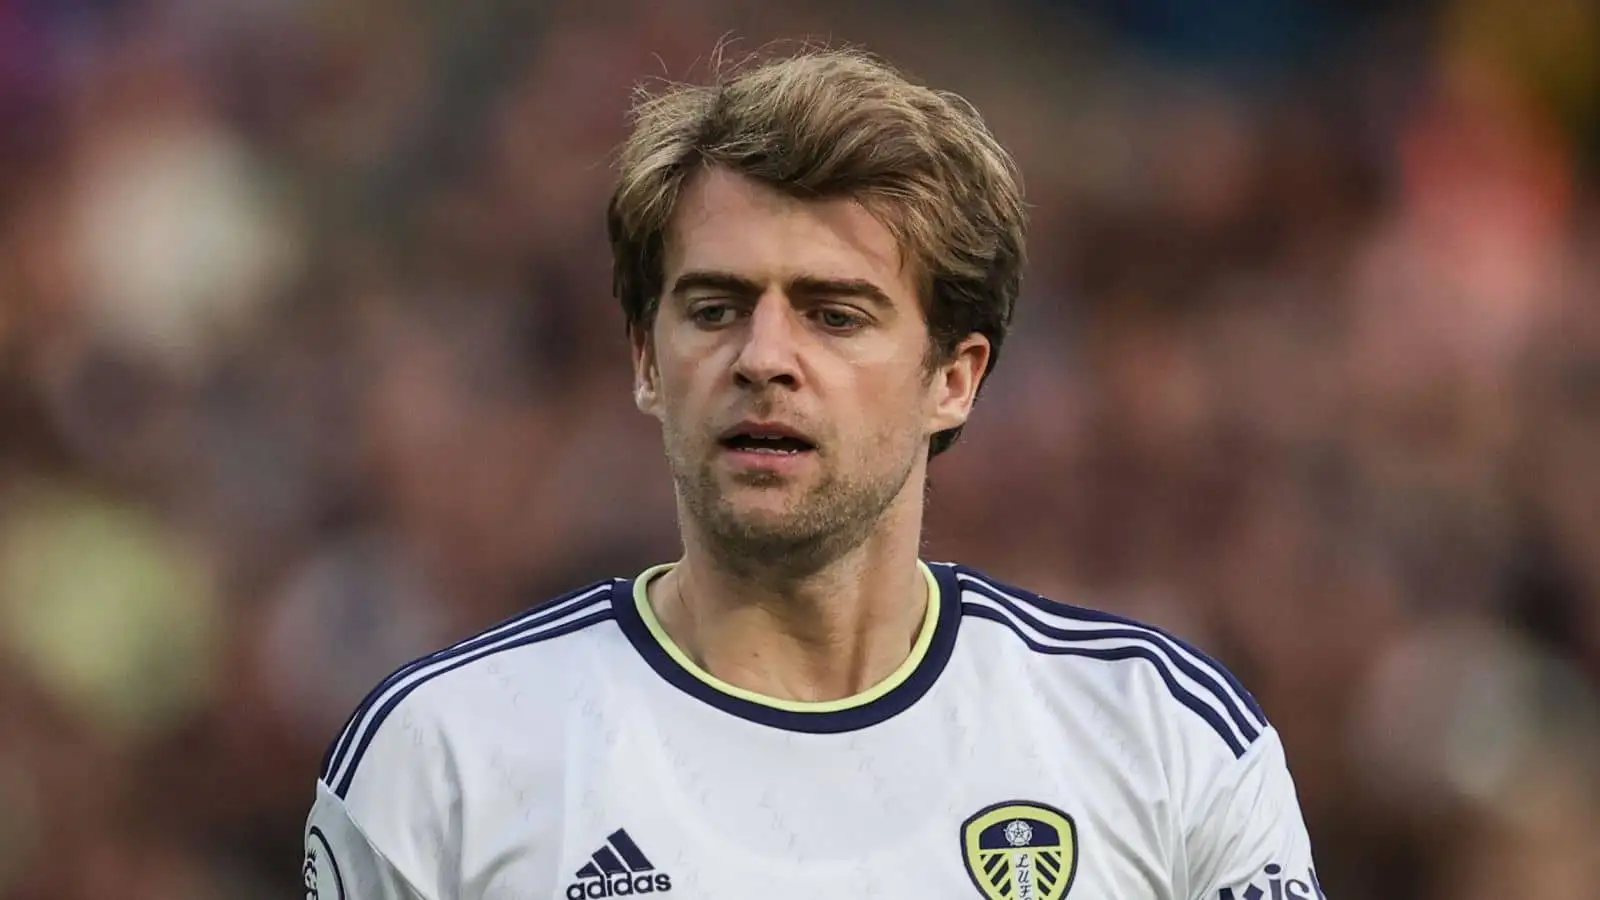 Leeds Utd transfer news: Journalist reveals concerns over deal for Prem striker seen as Patrick Bamford upgrade